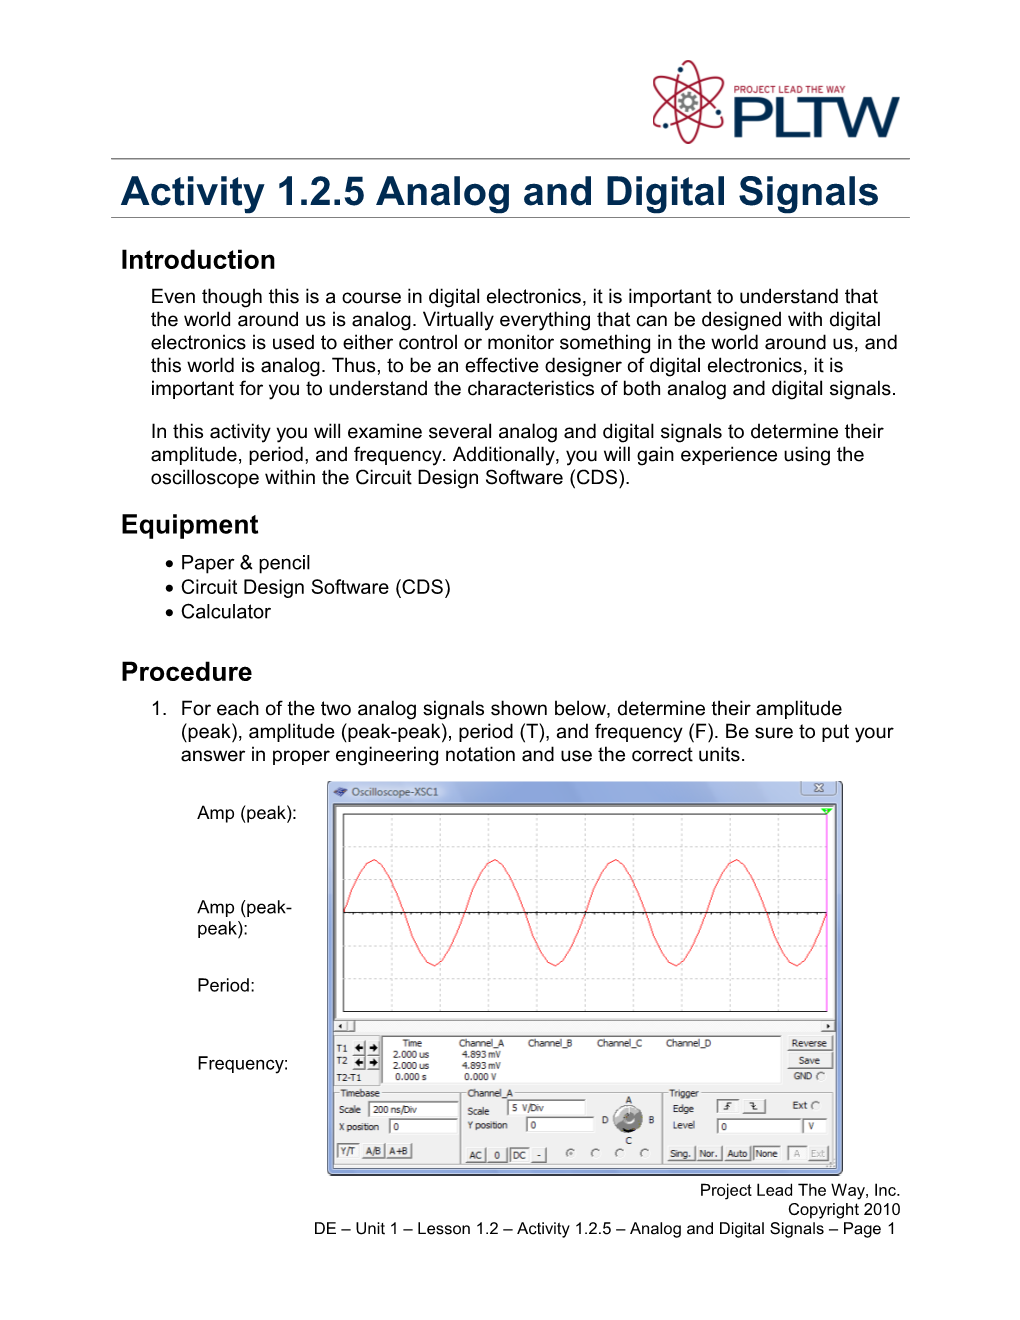 Activity 1.2.5 Analog And Digital Signals